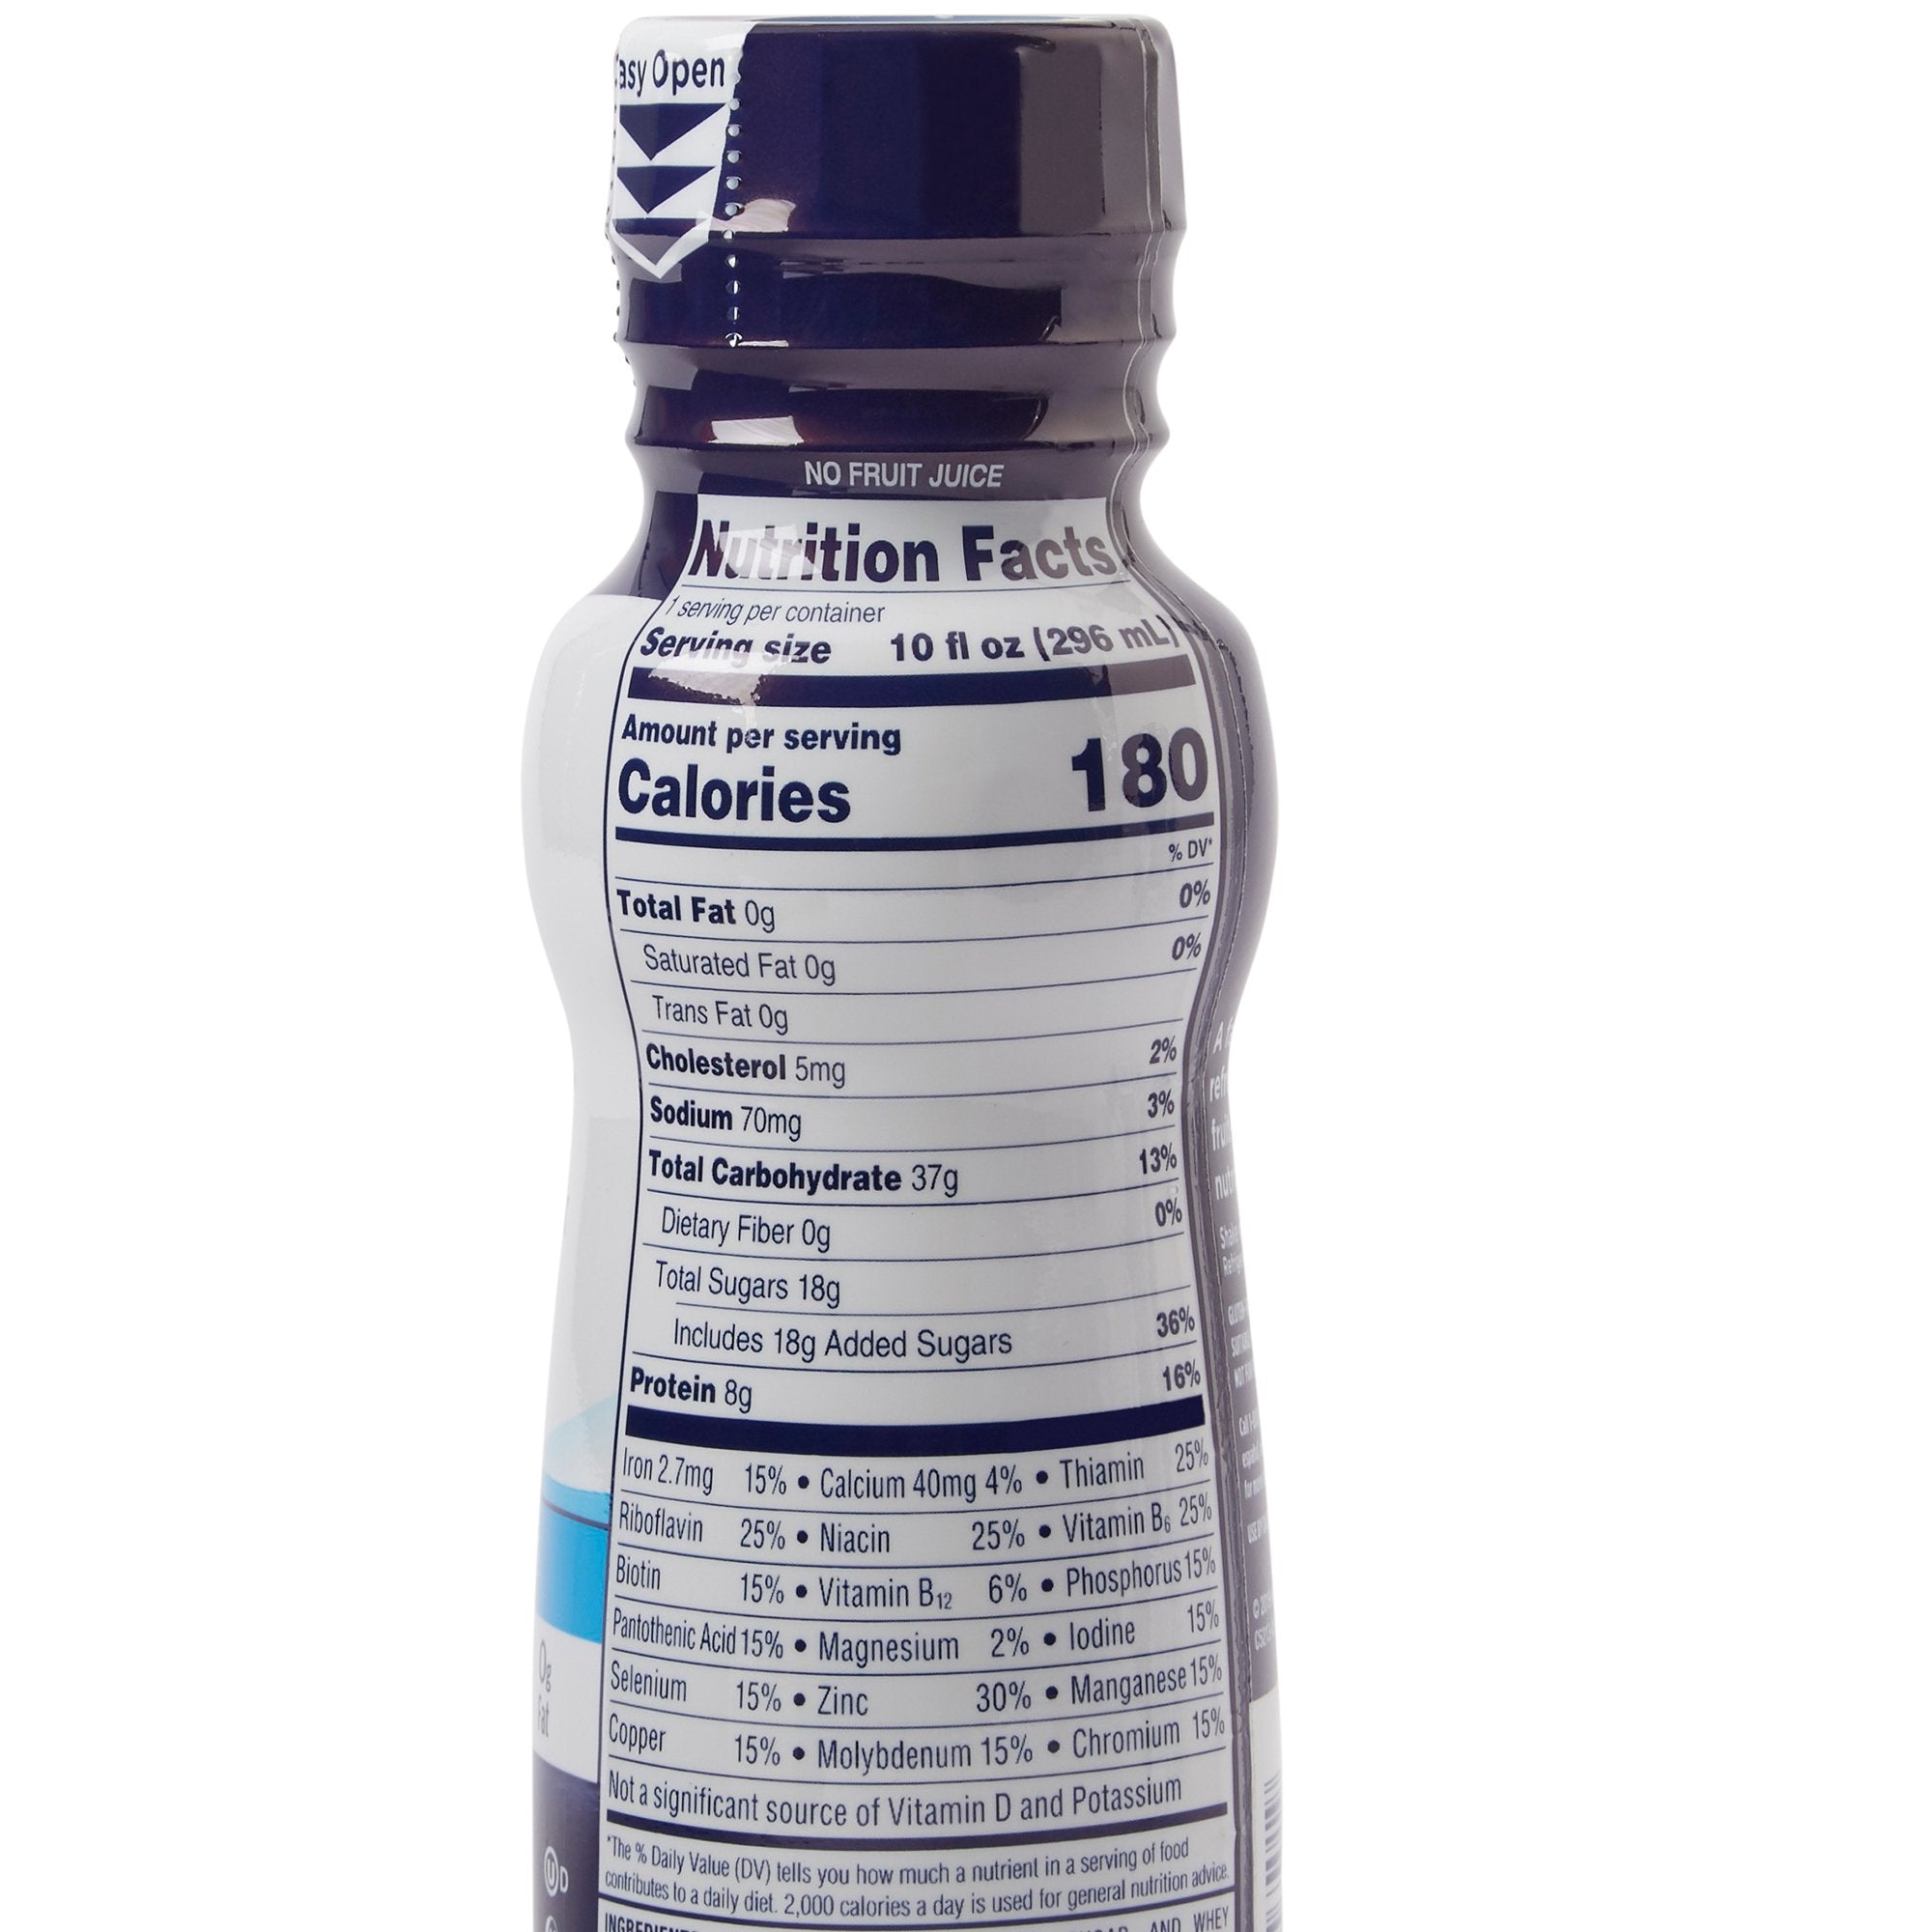 Oral Supplement Ensure Clear Blueberry Pomegranate Flavor Liquid 10 oz. Bottle